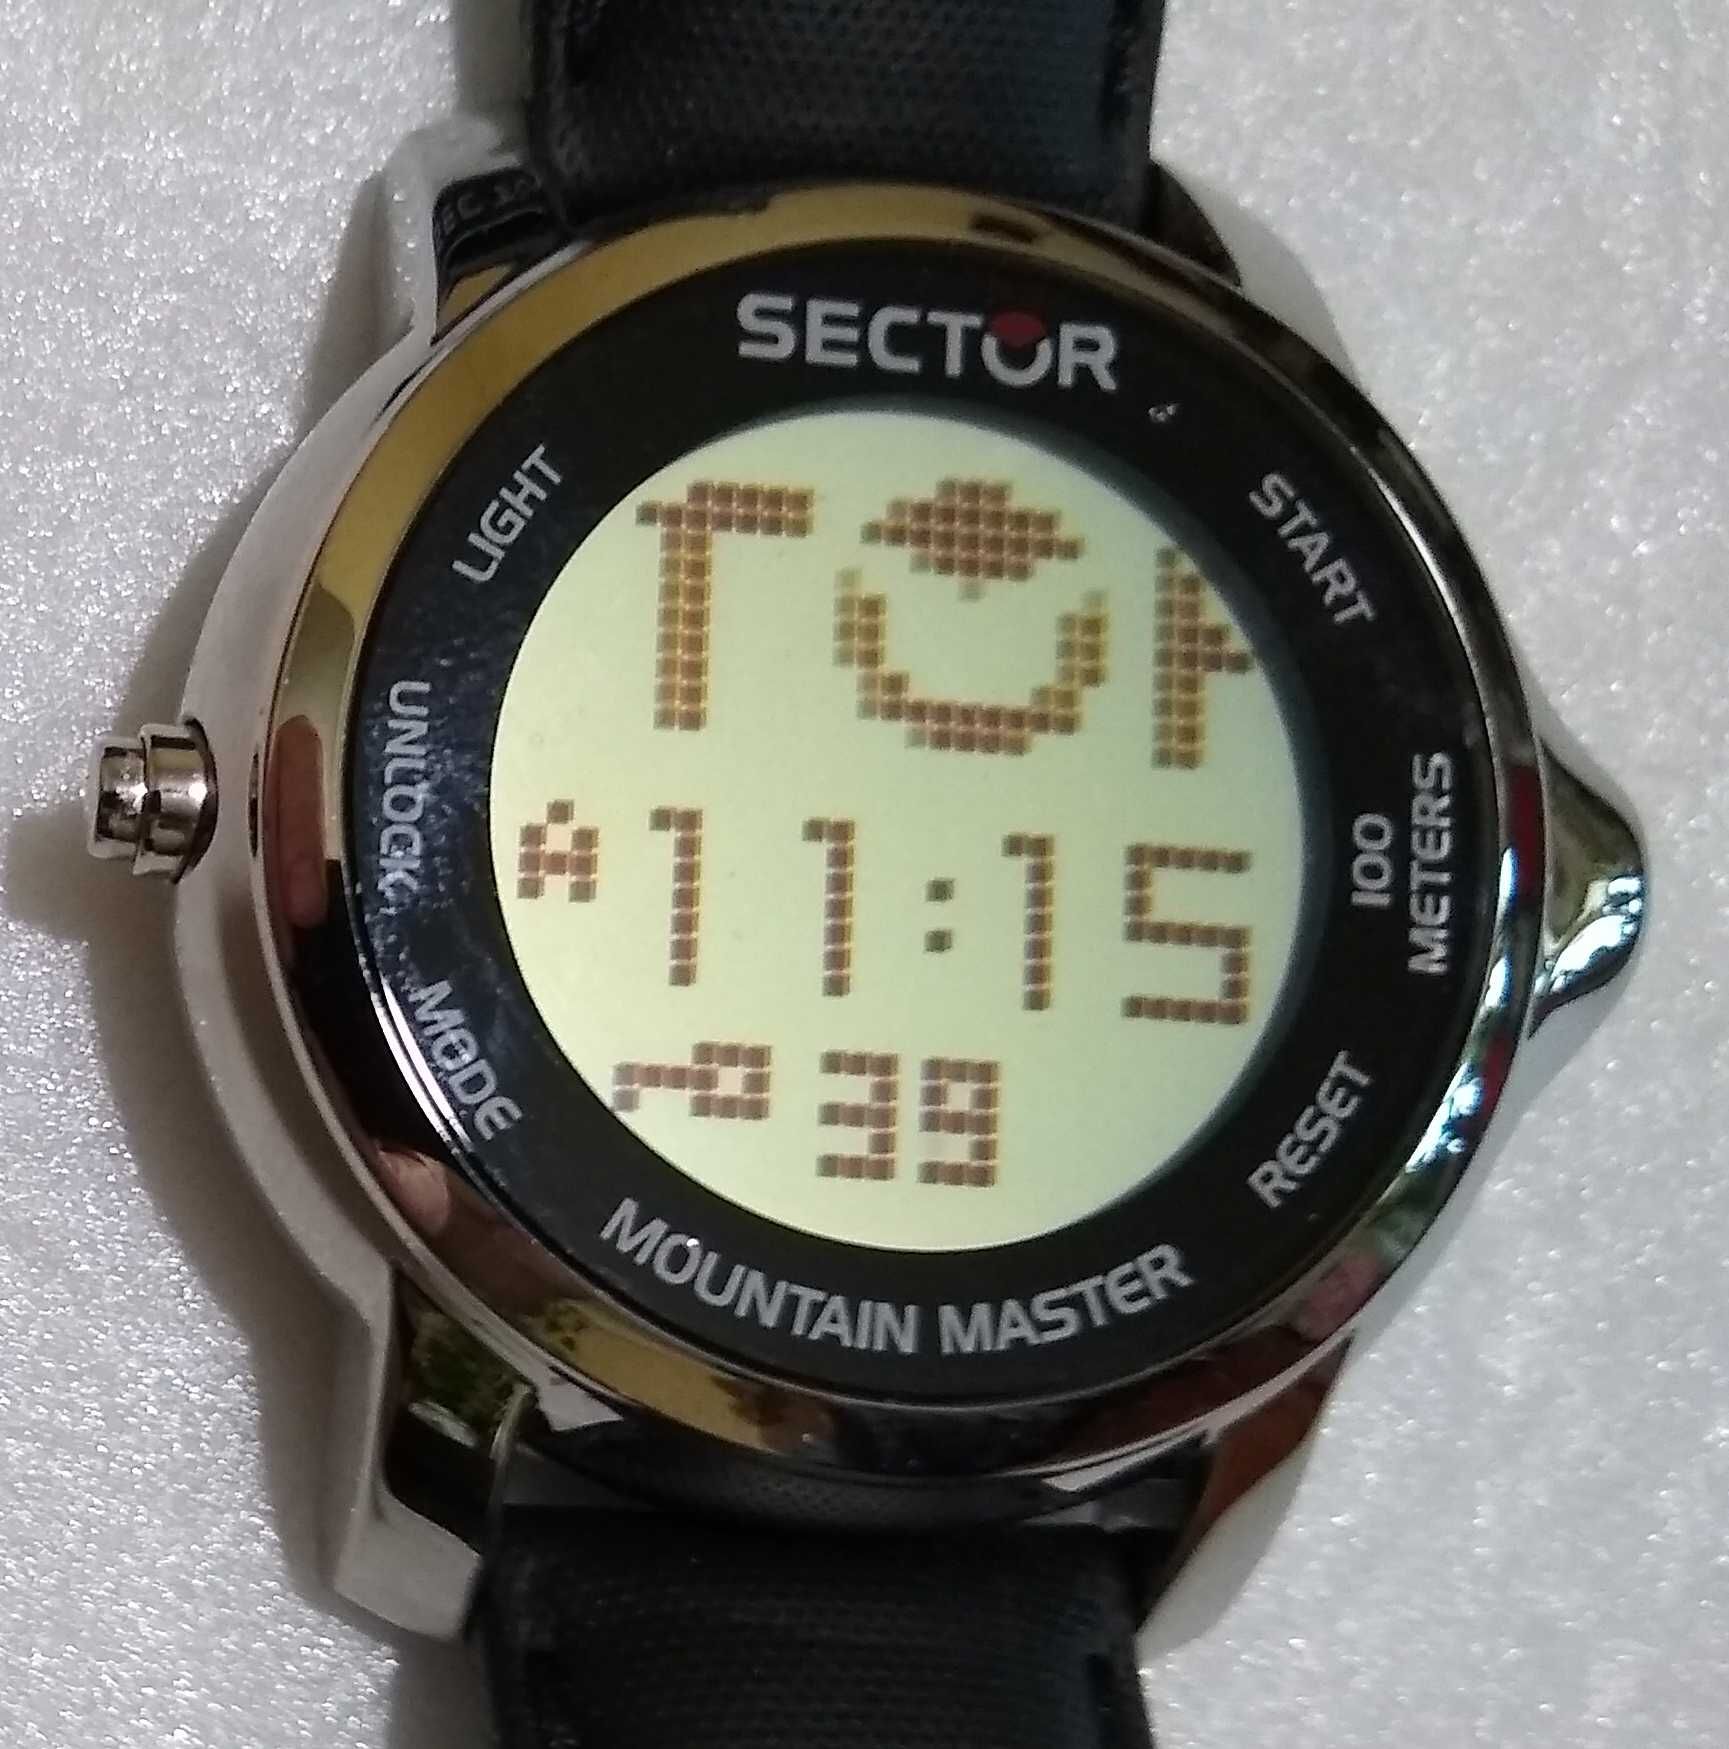 Часы•Sector Mountain Master •высотомер, барометр, компас, термометр